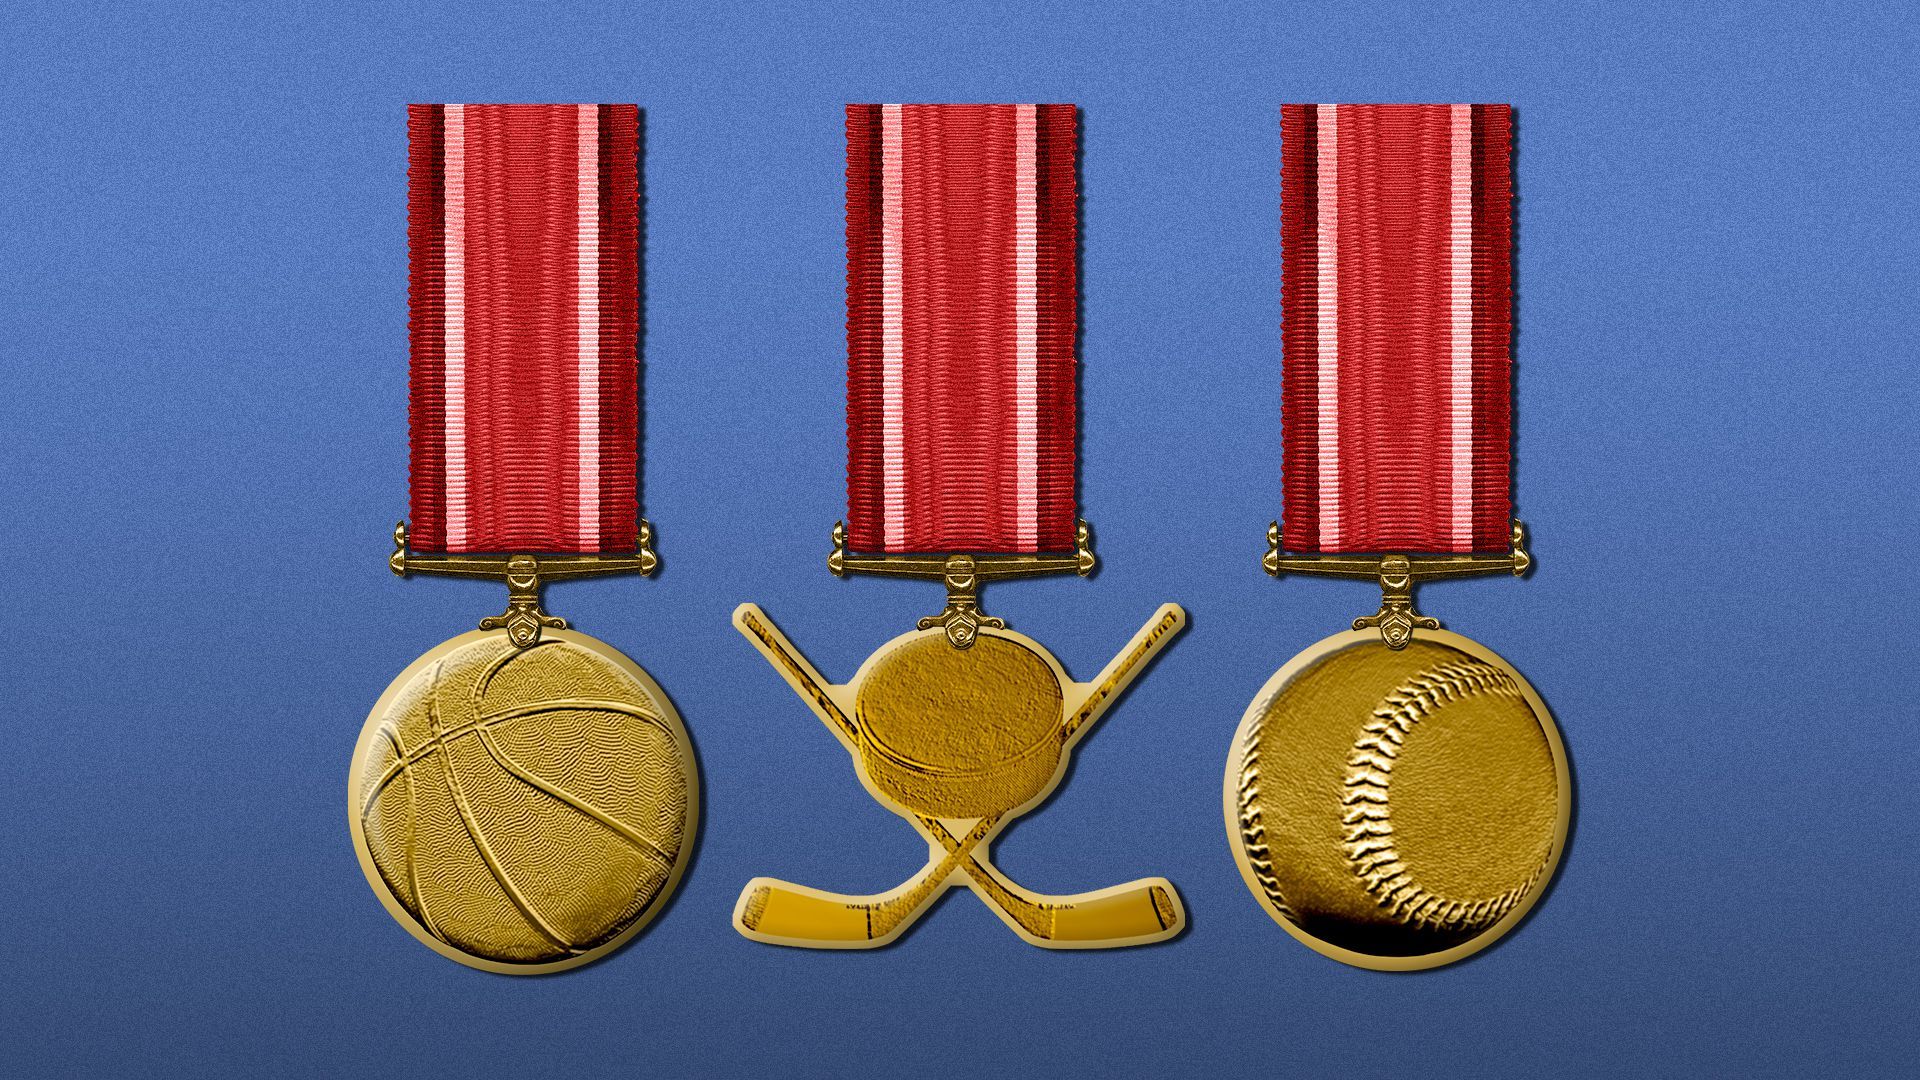 Illustration of sports symbols as medals